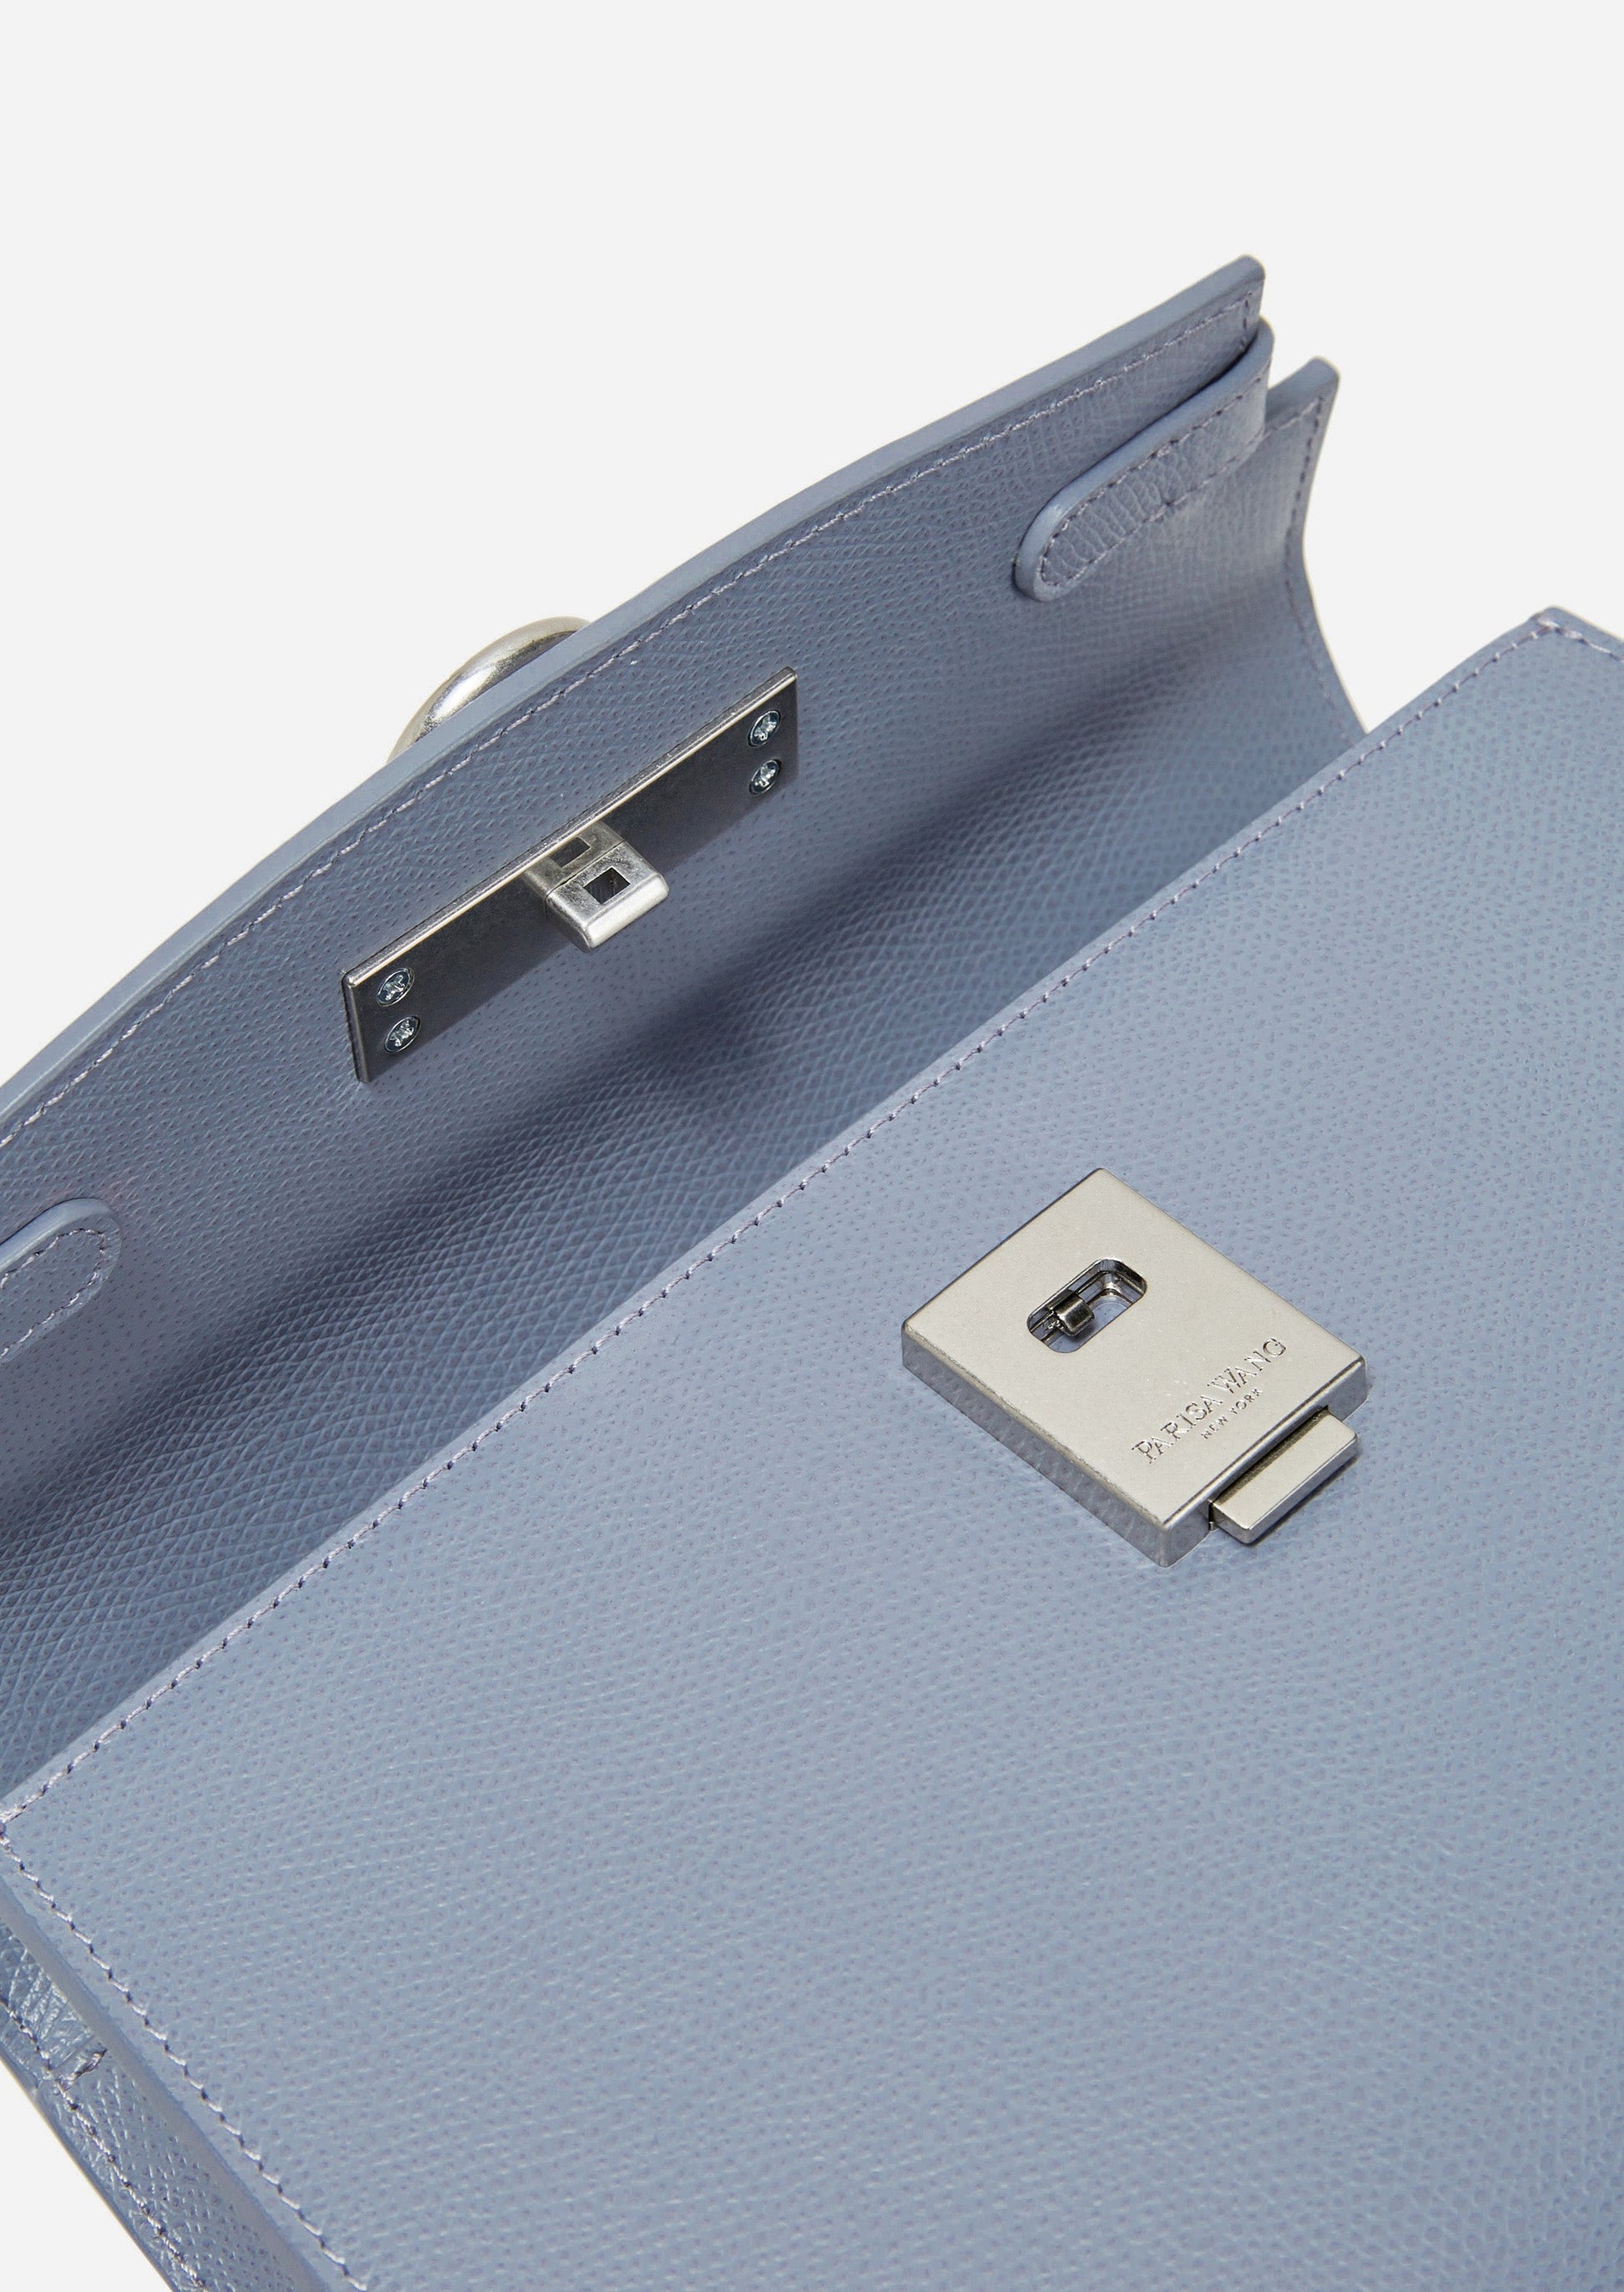 Unlocked Top Handle Bag in Monet Blue | Parisa Wang